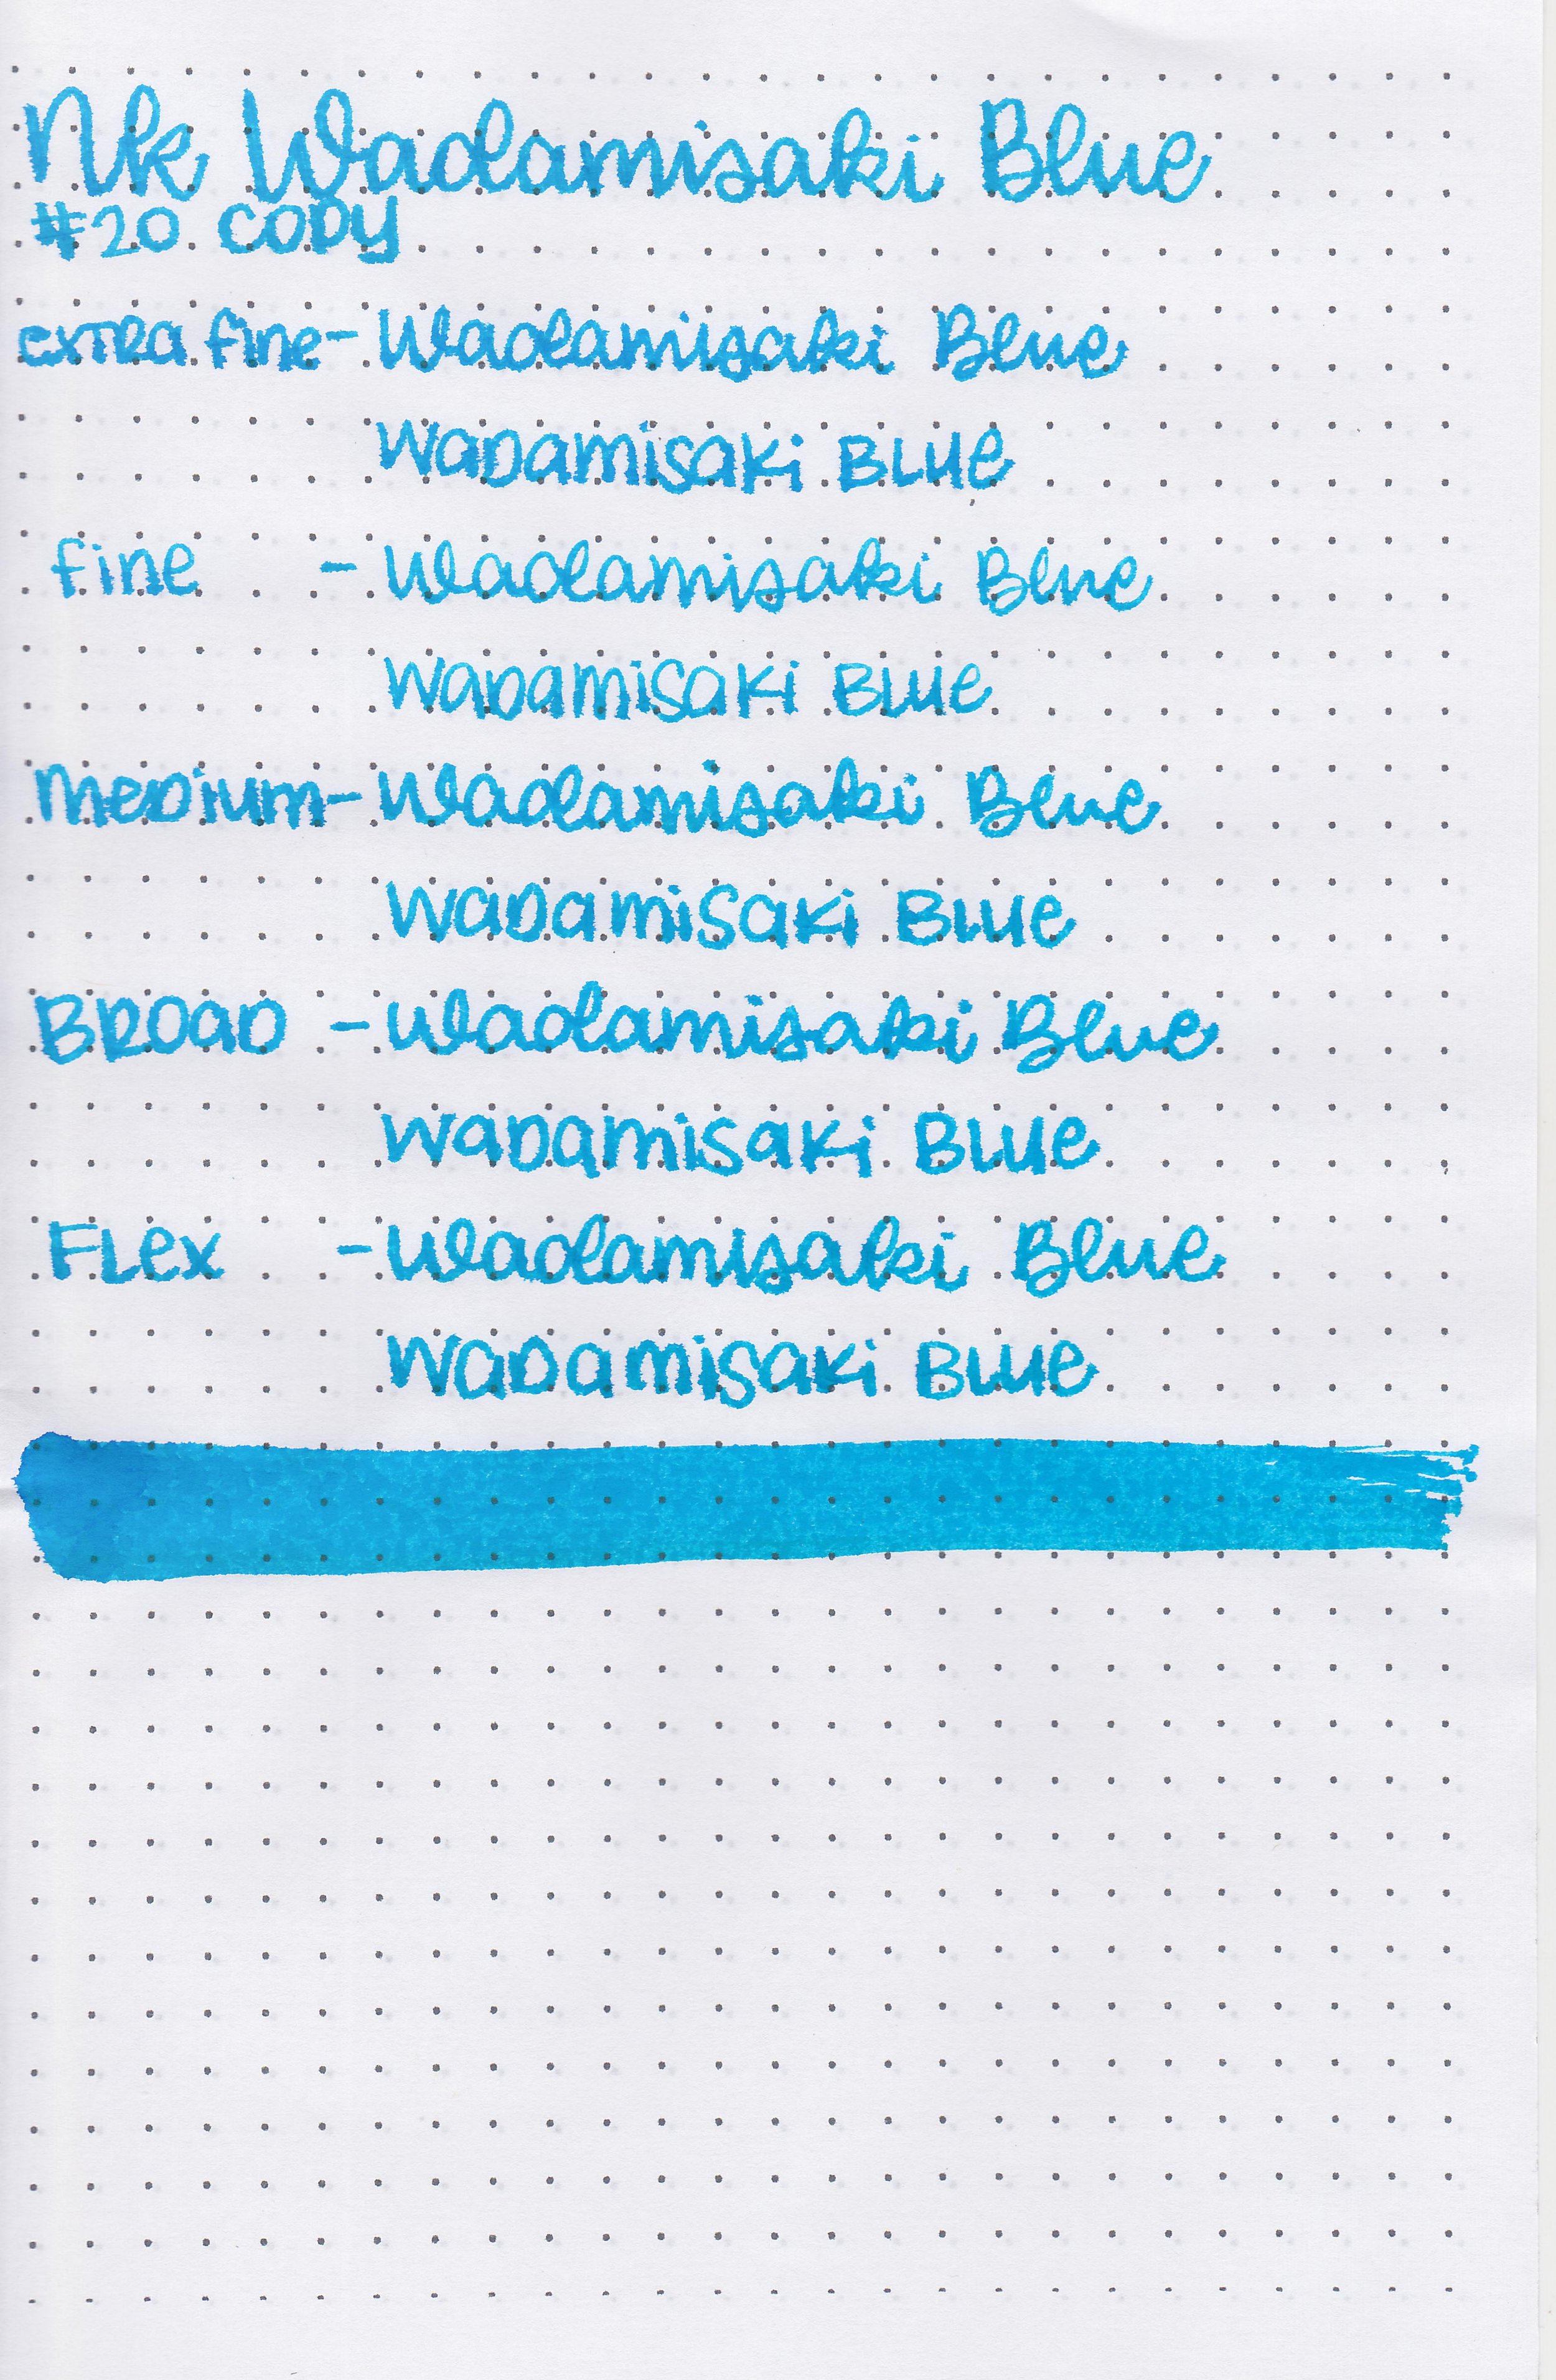 nk-wadamisaki-blue-10.jpg